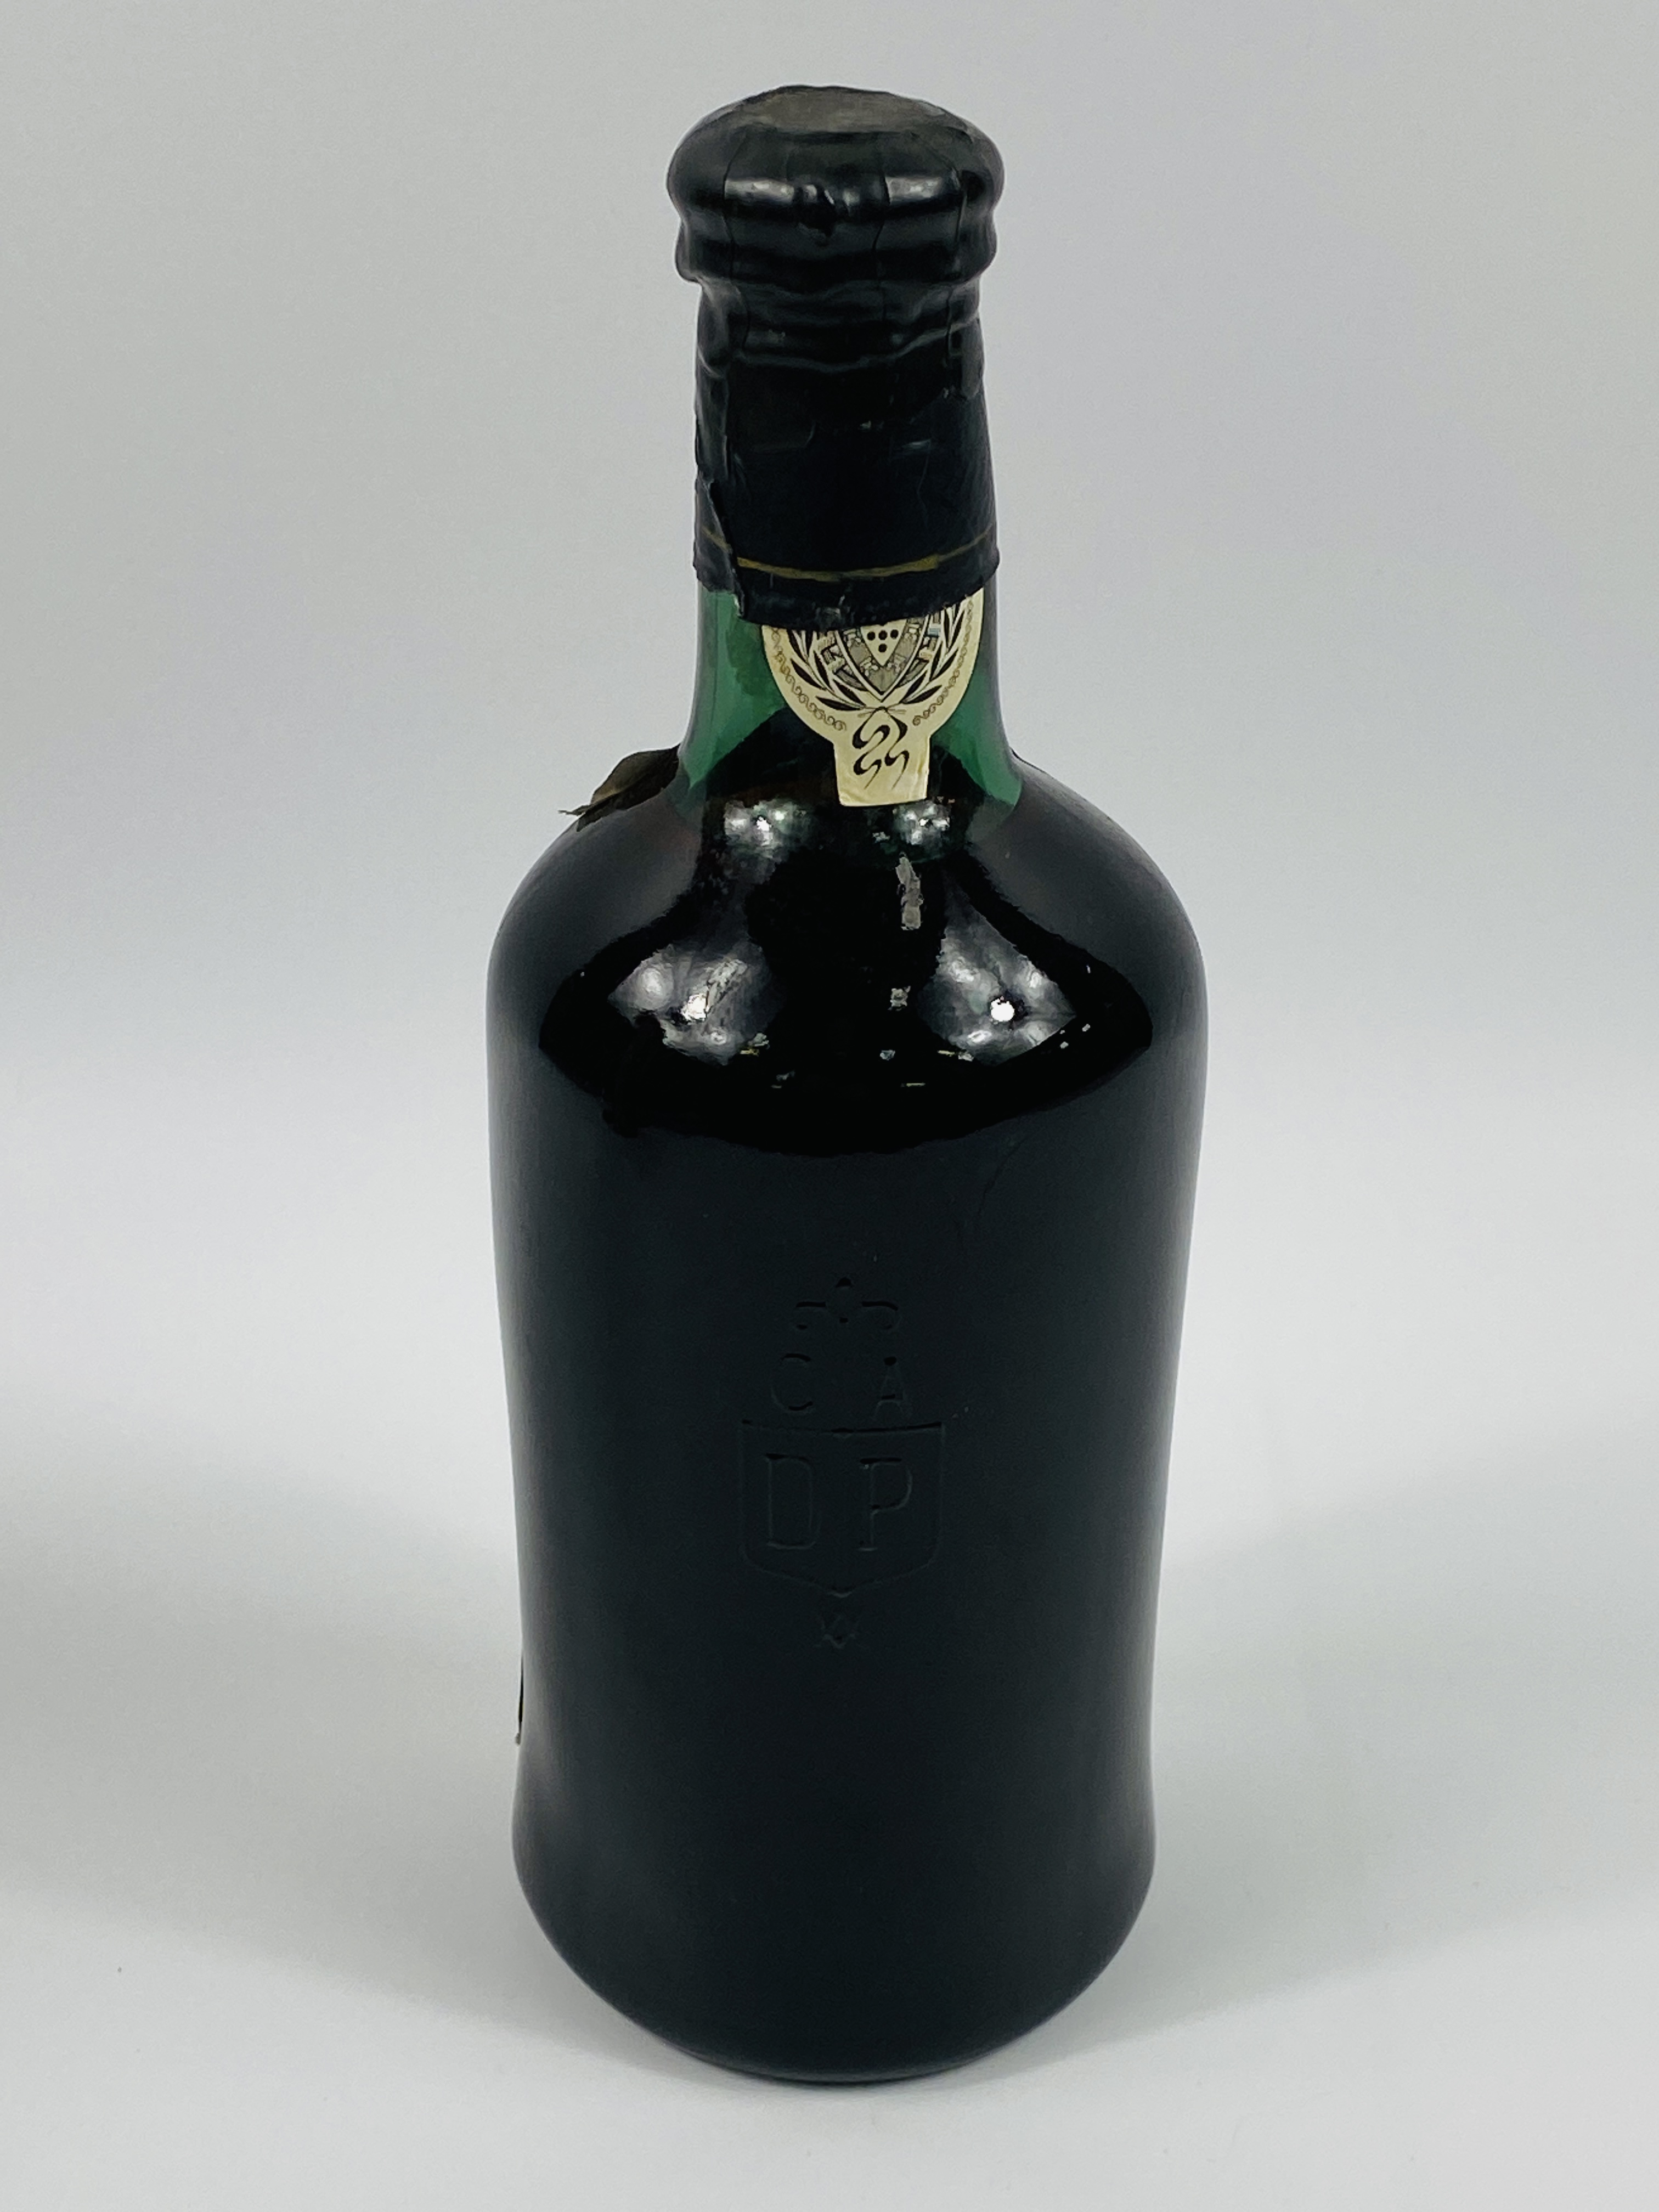 26fl oz bottle of Royal Oporto Vinho do Porto, 1963 - Image 3 of 3